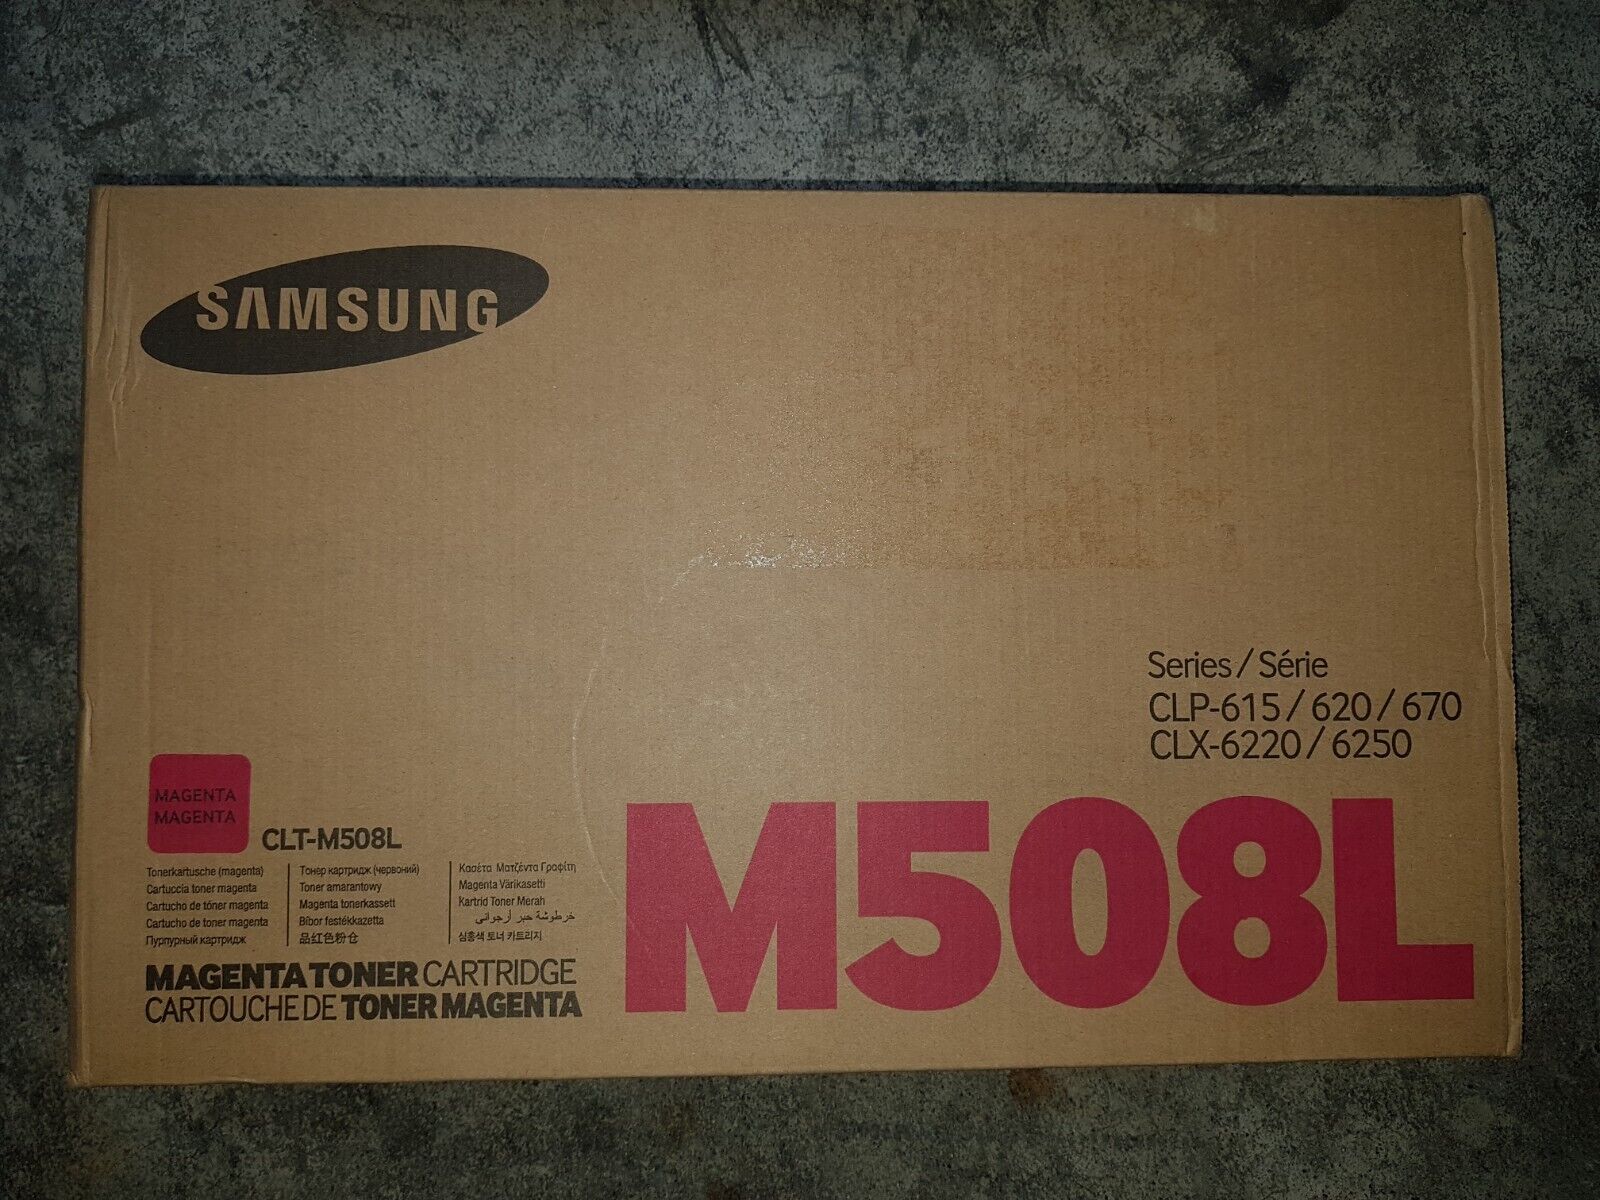 Genuine Samsung CLTM508L Magenta Toner Cartridge CLP-615/620/670 CLX-6220 BNIB